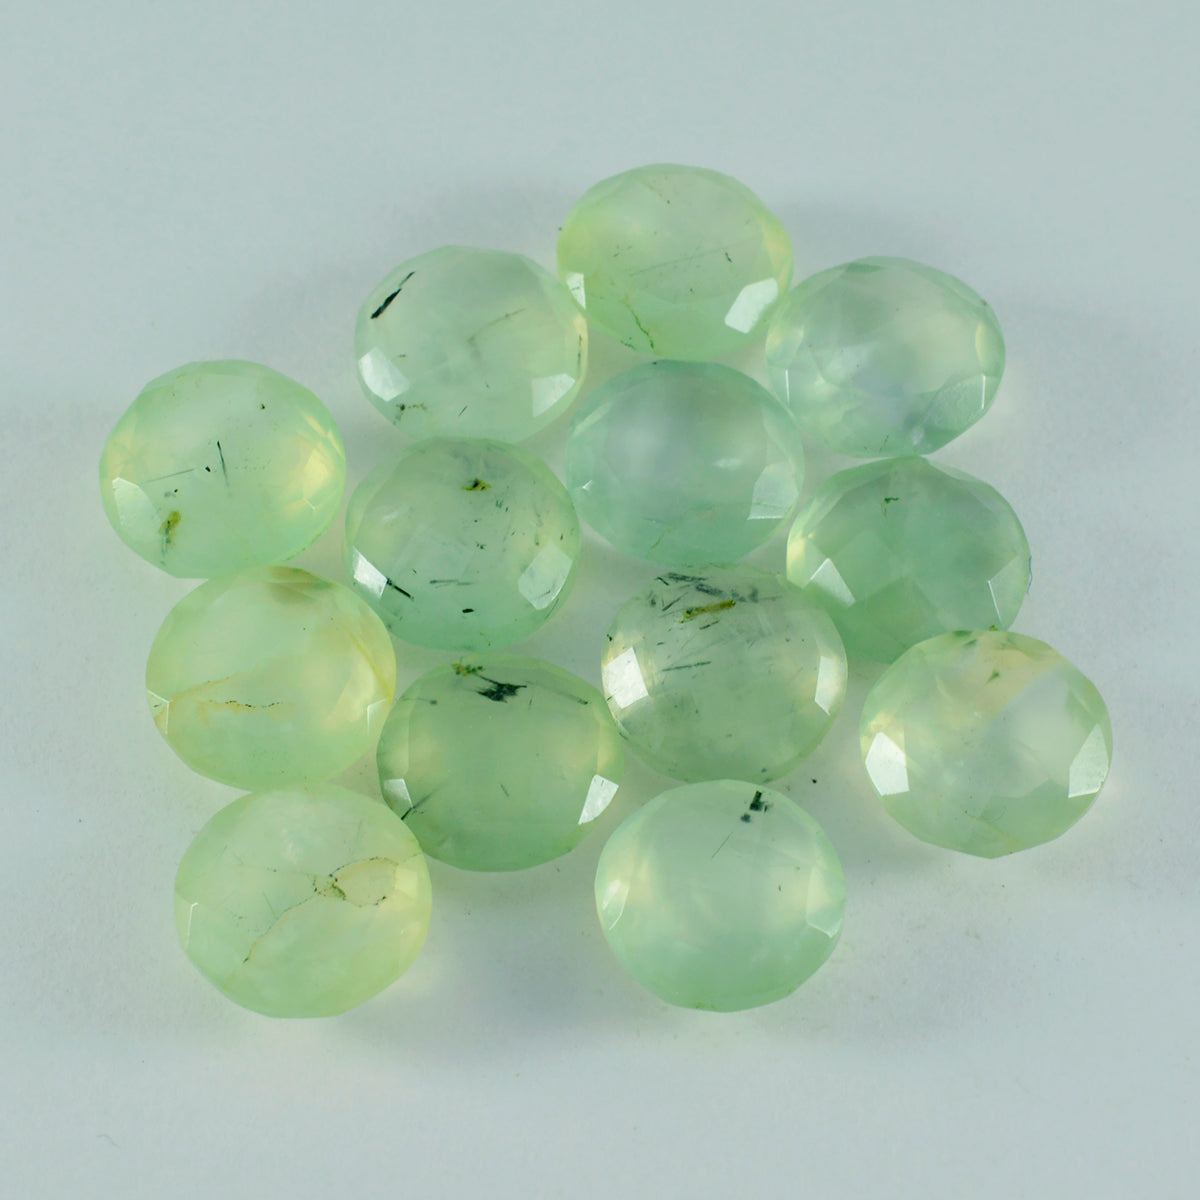 Riyogems 1PC Green Prehnite Faceted 10x10 mm Round Shape A+ Quality Stone